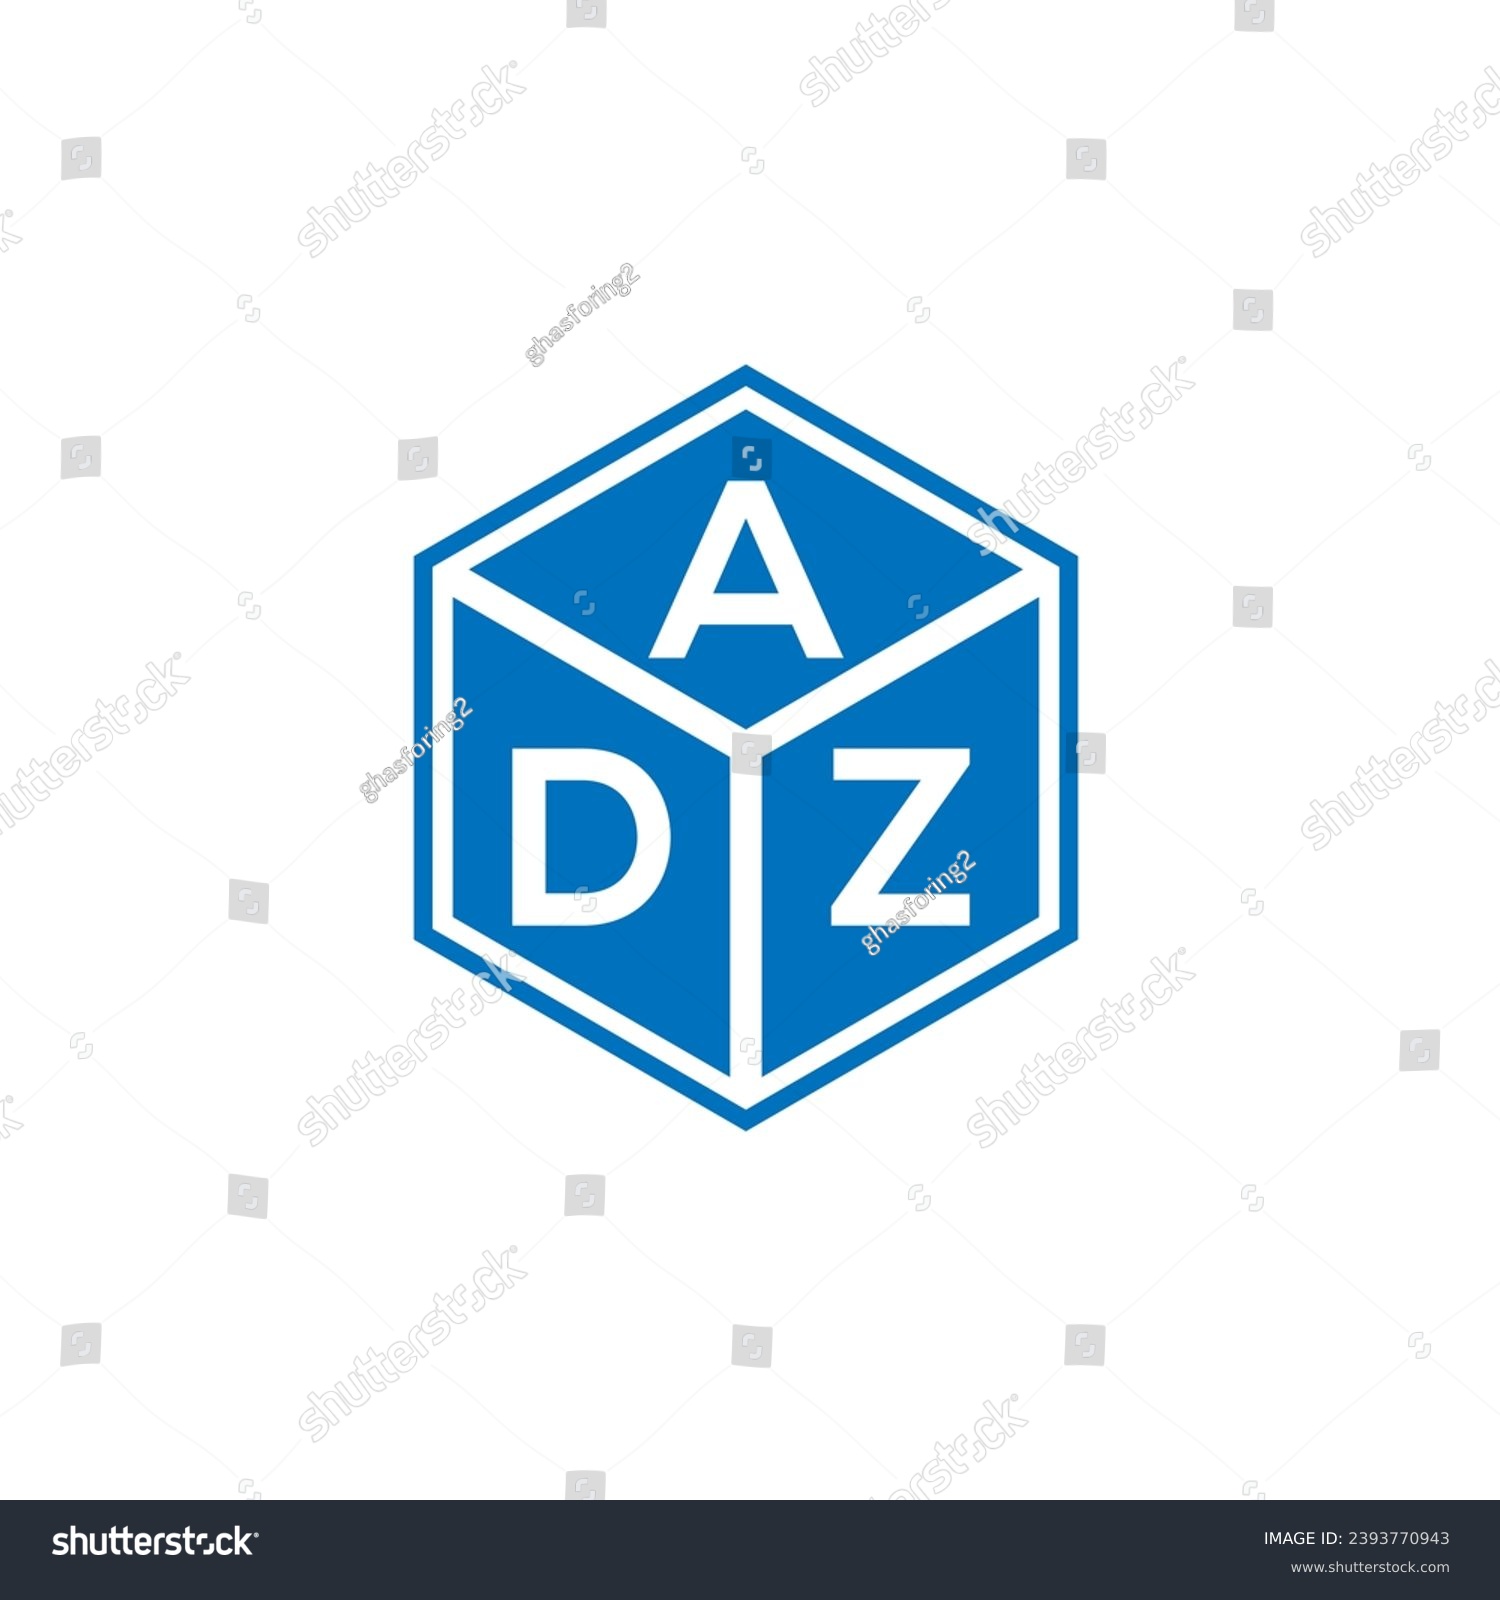 SVG of ADZ letter logo design on black background. ADZ creative initials letter logo concept. ADZ letter design.
 svg